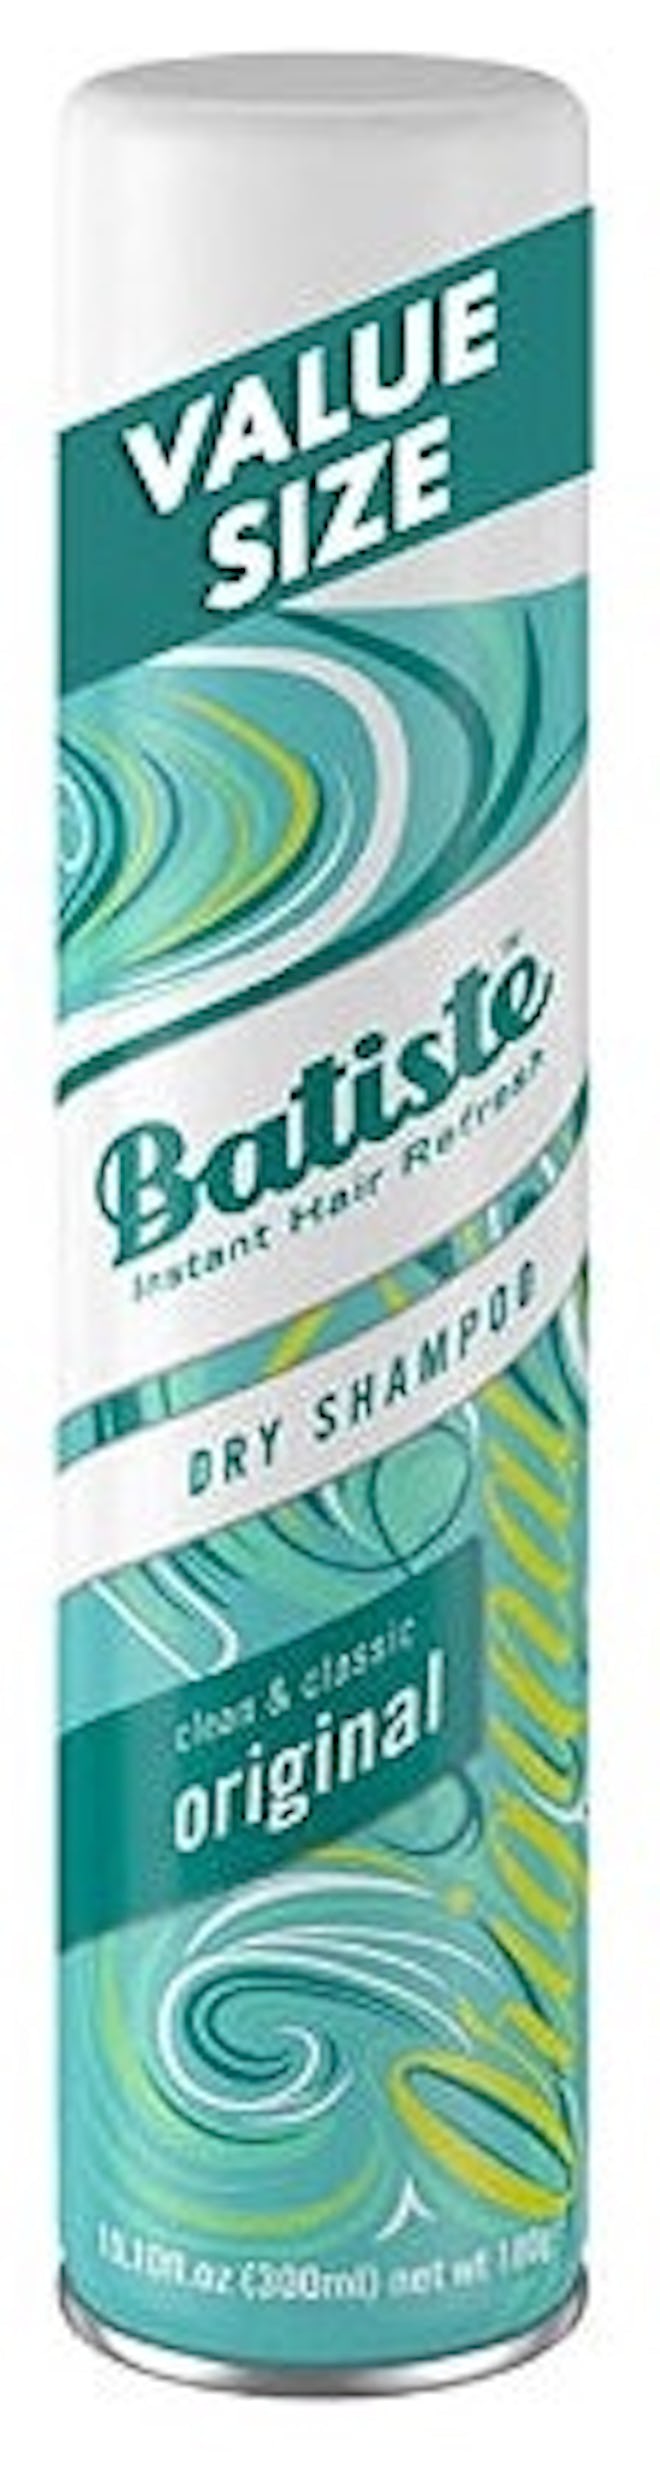 Batiste Dry Shampoo (3-Pack)